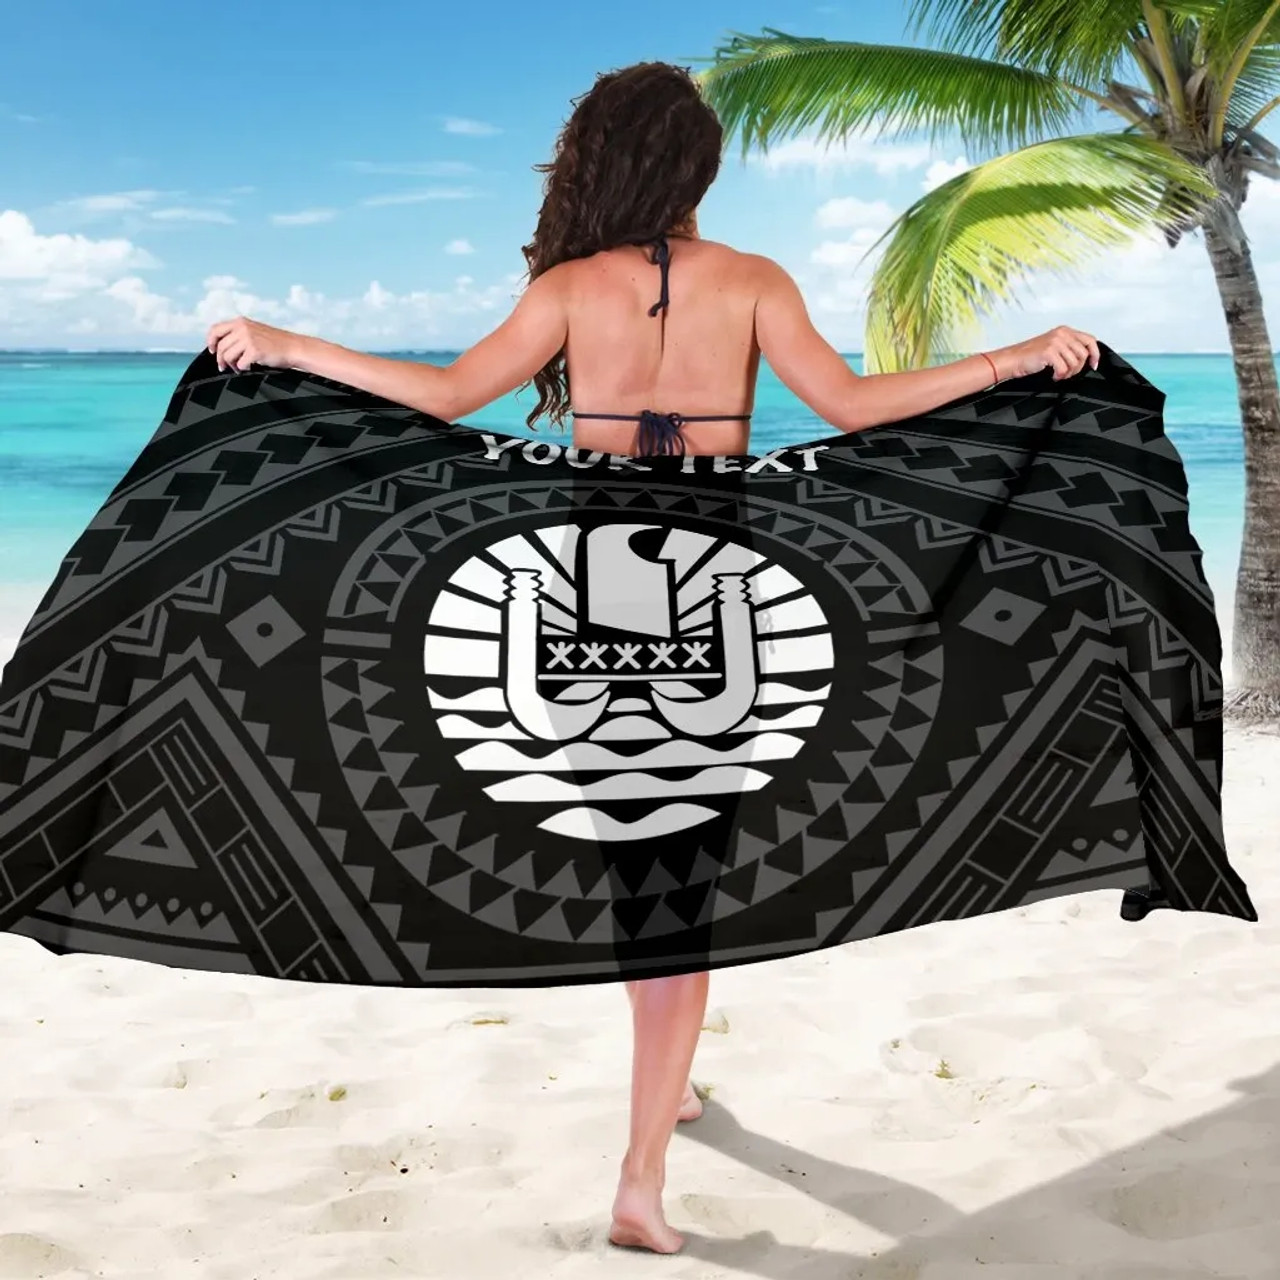 Tahiti Personalised Sarong - Tahiti Seal In Polynesian Tattoo Style (Black) 3